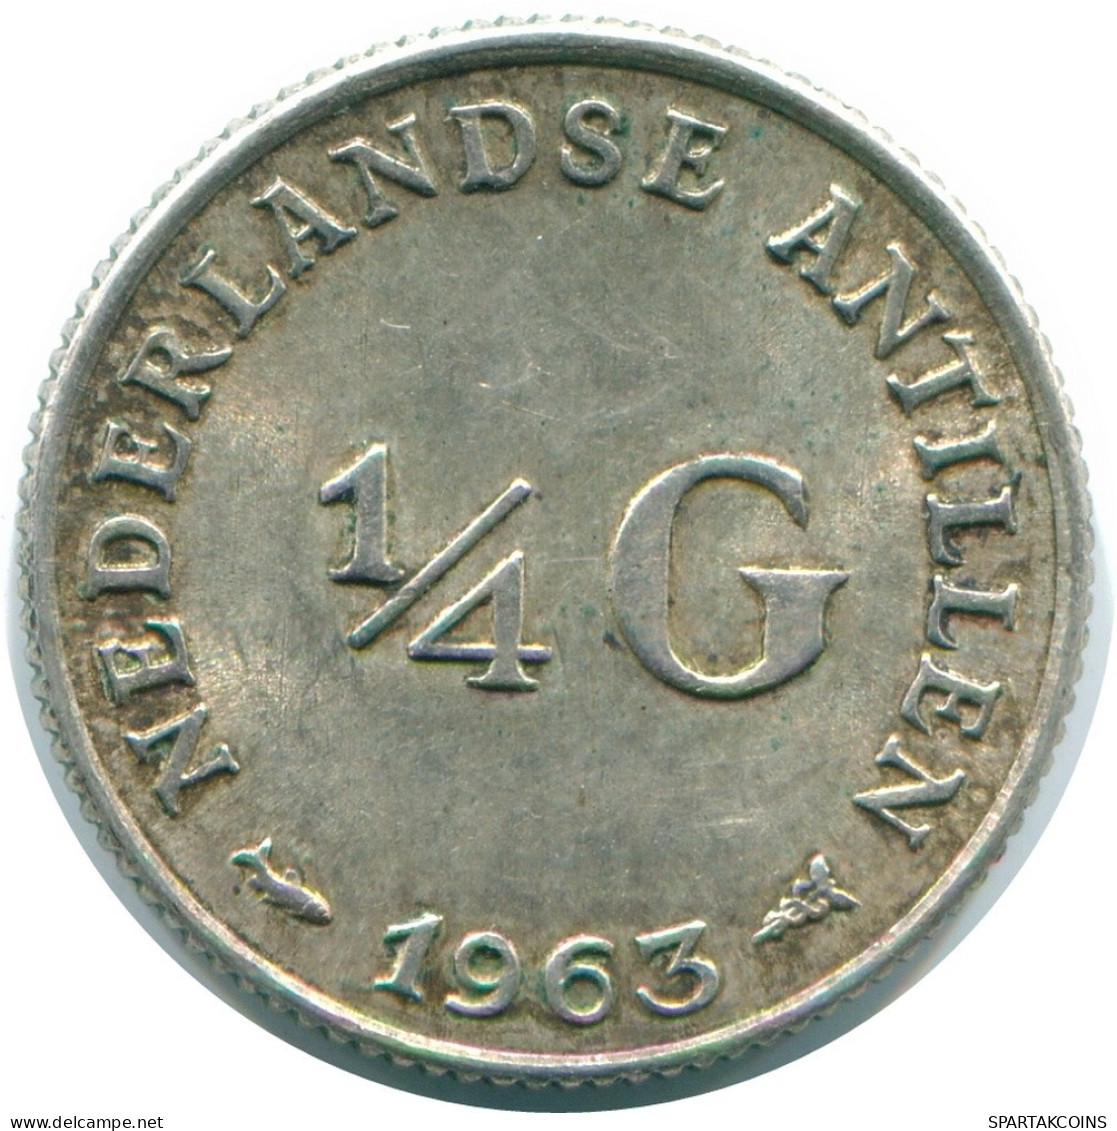 1/4 GULDEN 1963 NETHERLANDS ANTILLES SILVER Colonial Coin #NL11216.4.U.A - Niederländische Antillen